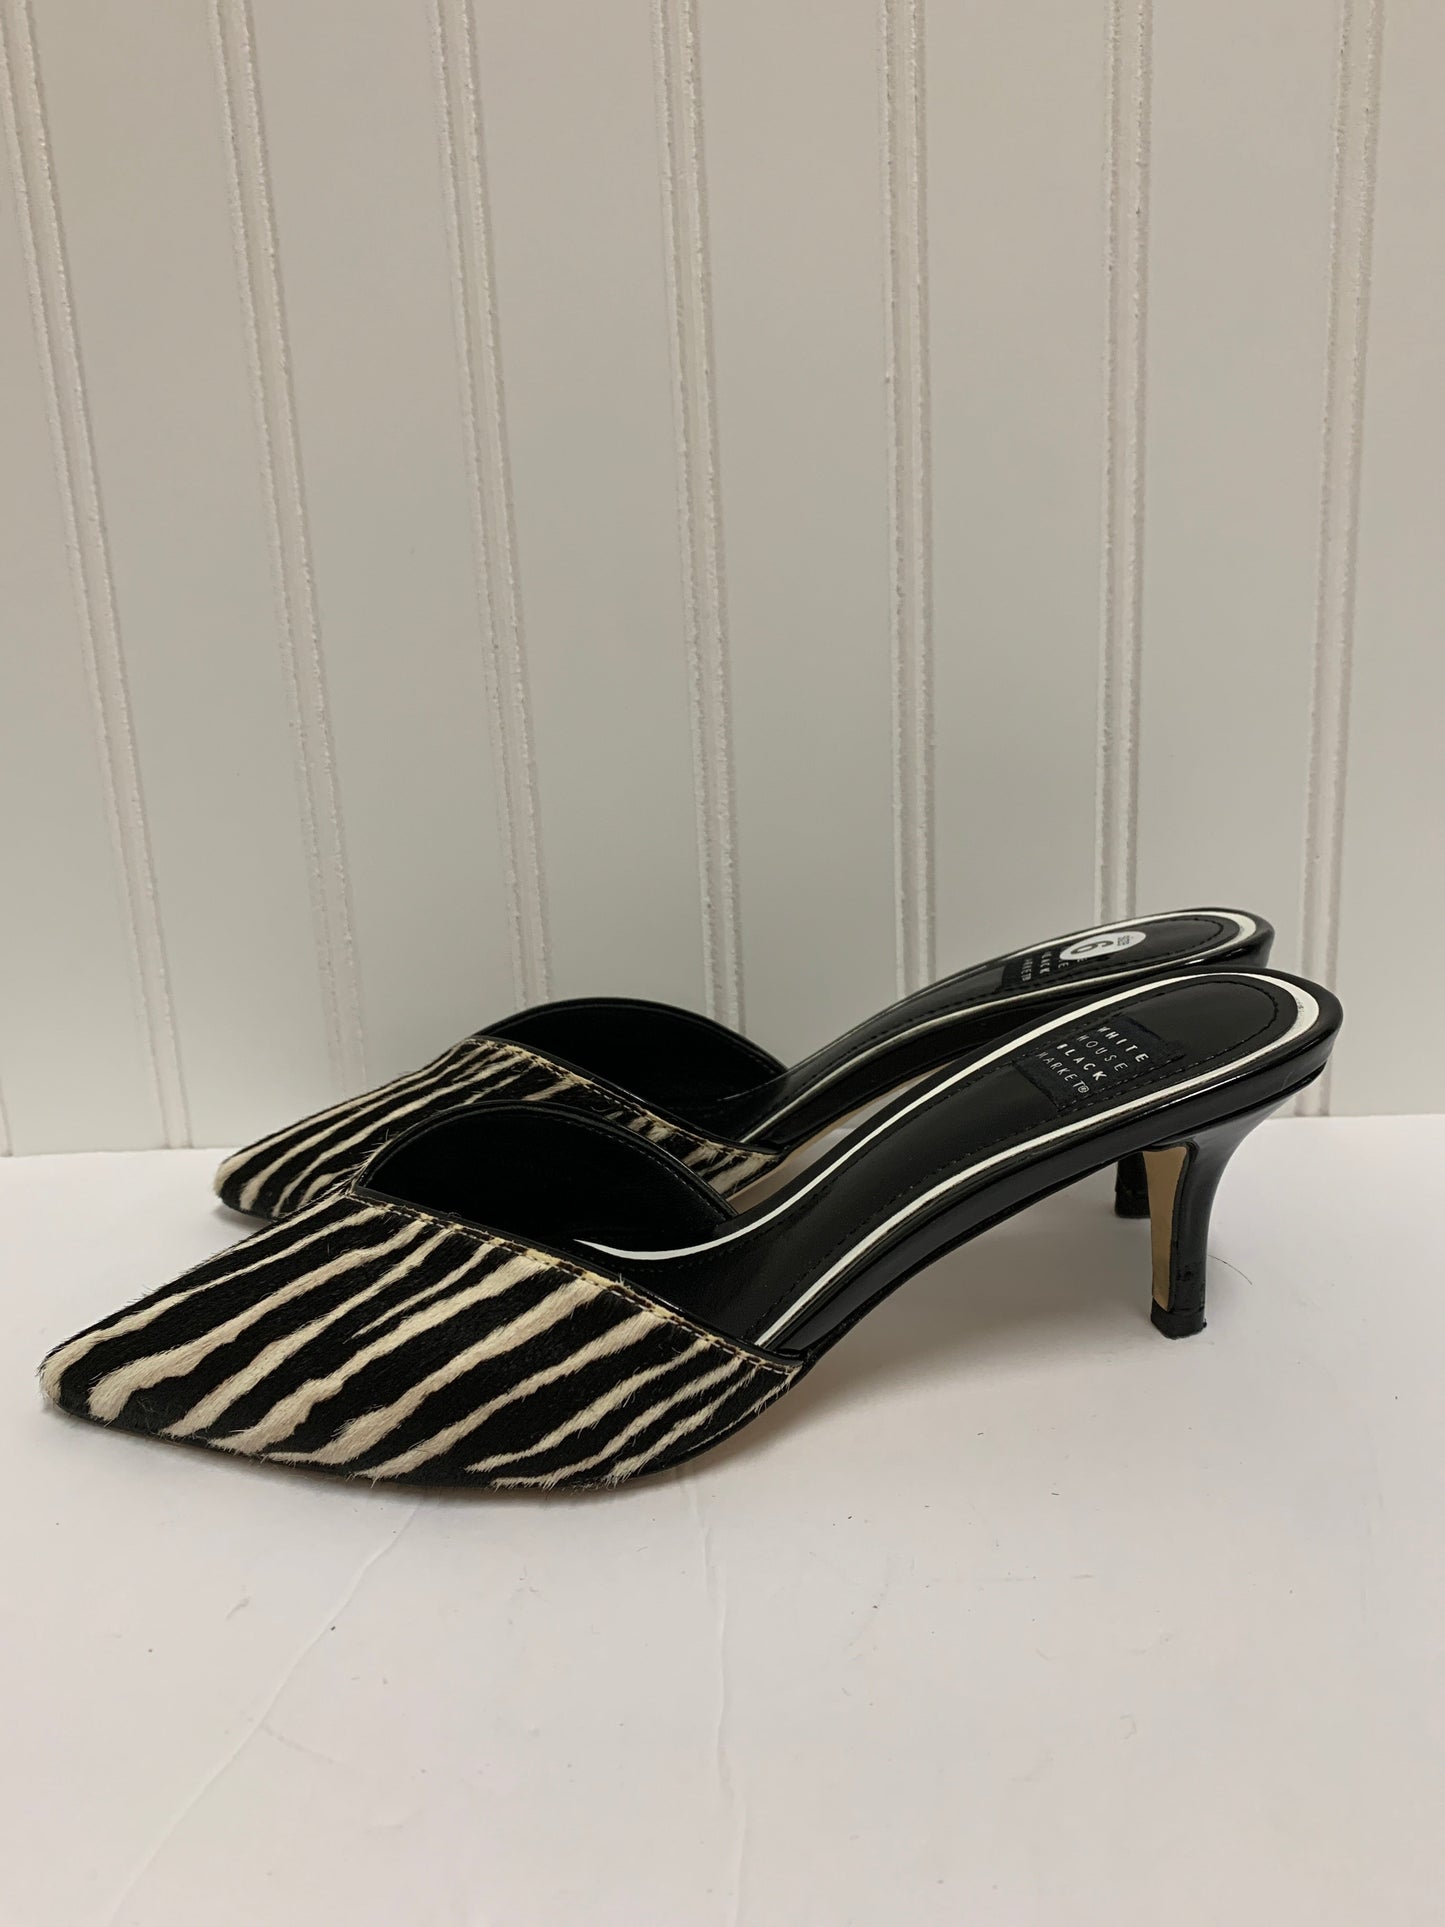 Shoes Heels Kitten By White House Black Market  Size: 6